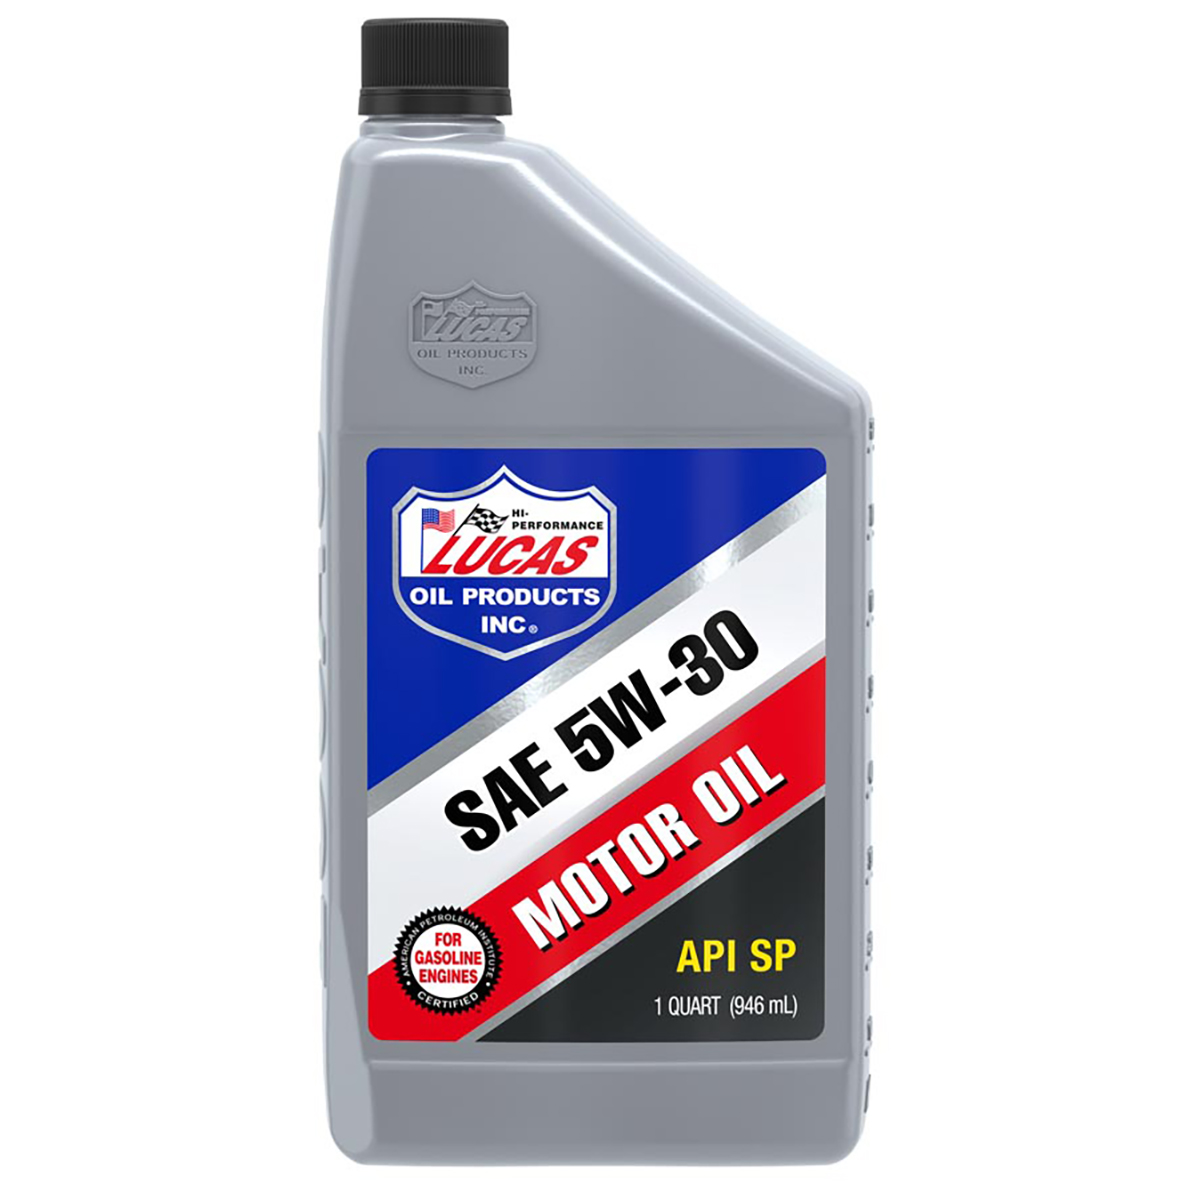 SAE 5W-30 API SP Motor Oil